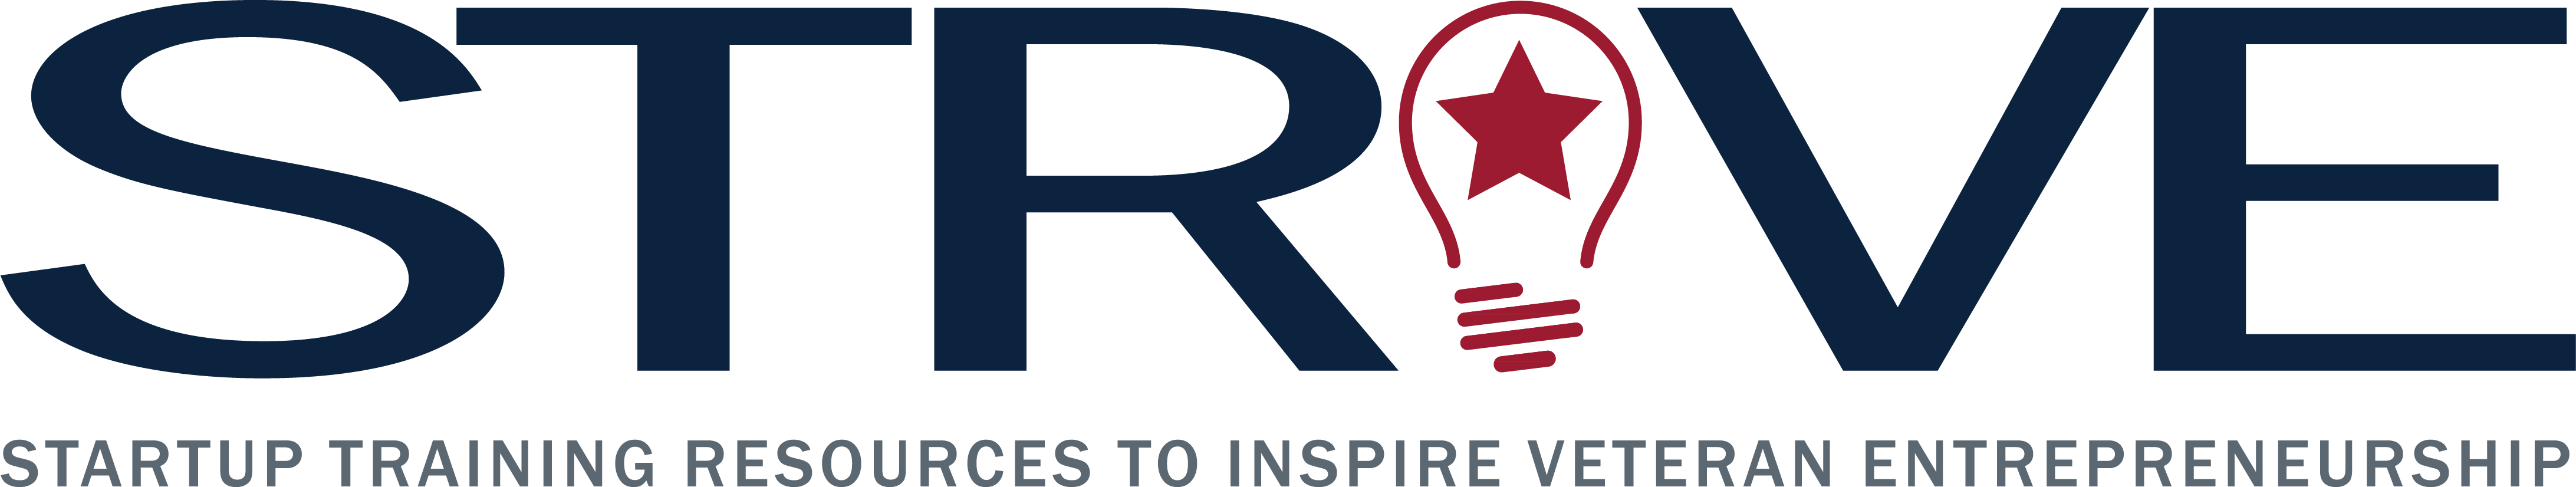 STRIVE logo, Startup Training Resources Inspiring Veteran Entrepreneurship